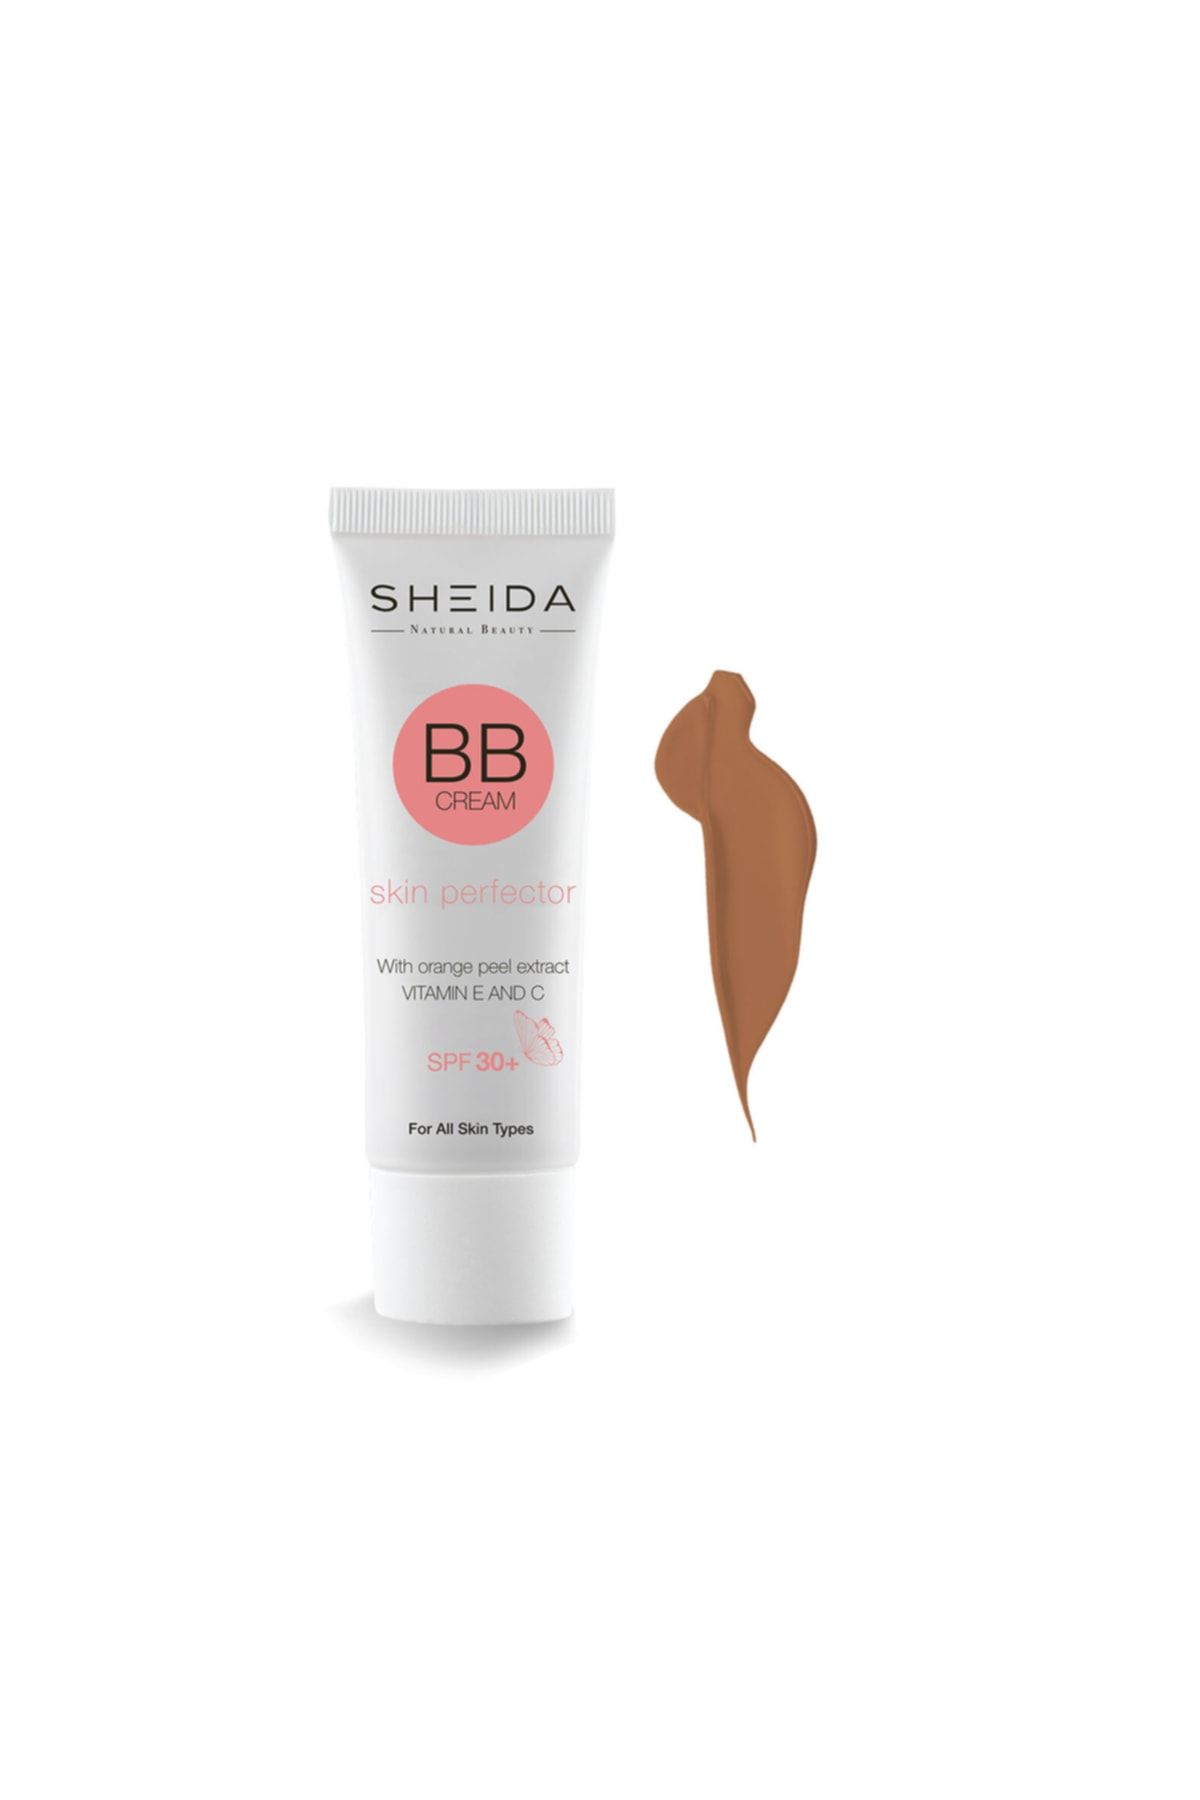 Sheida Bb Cream(dark) Spf 30+